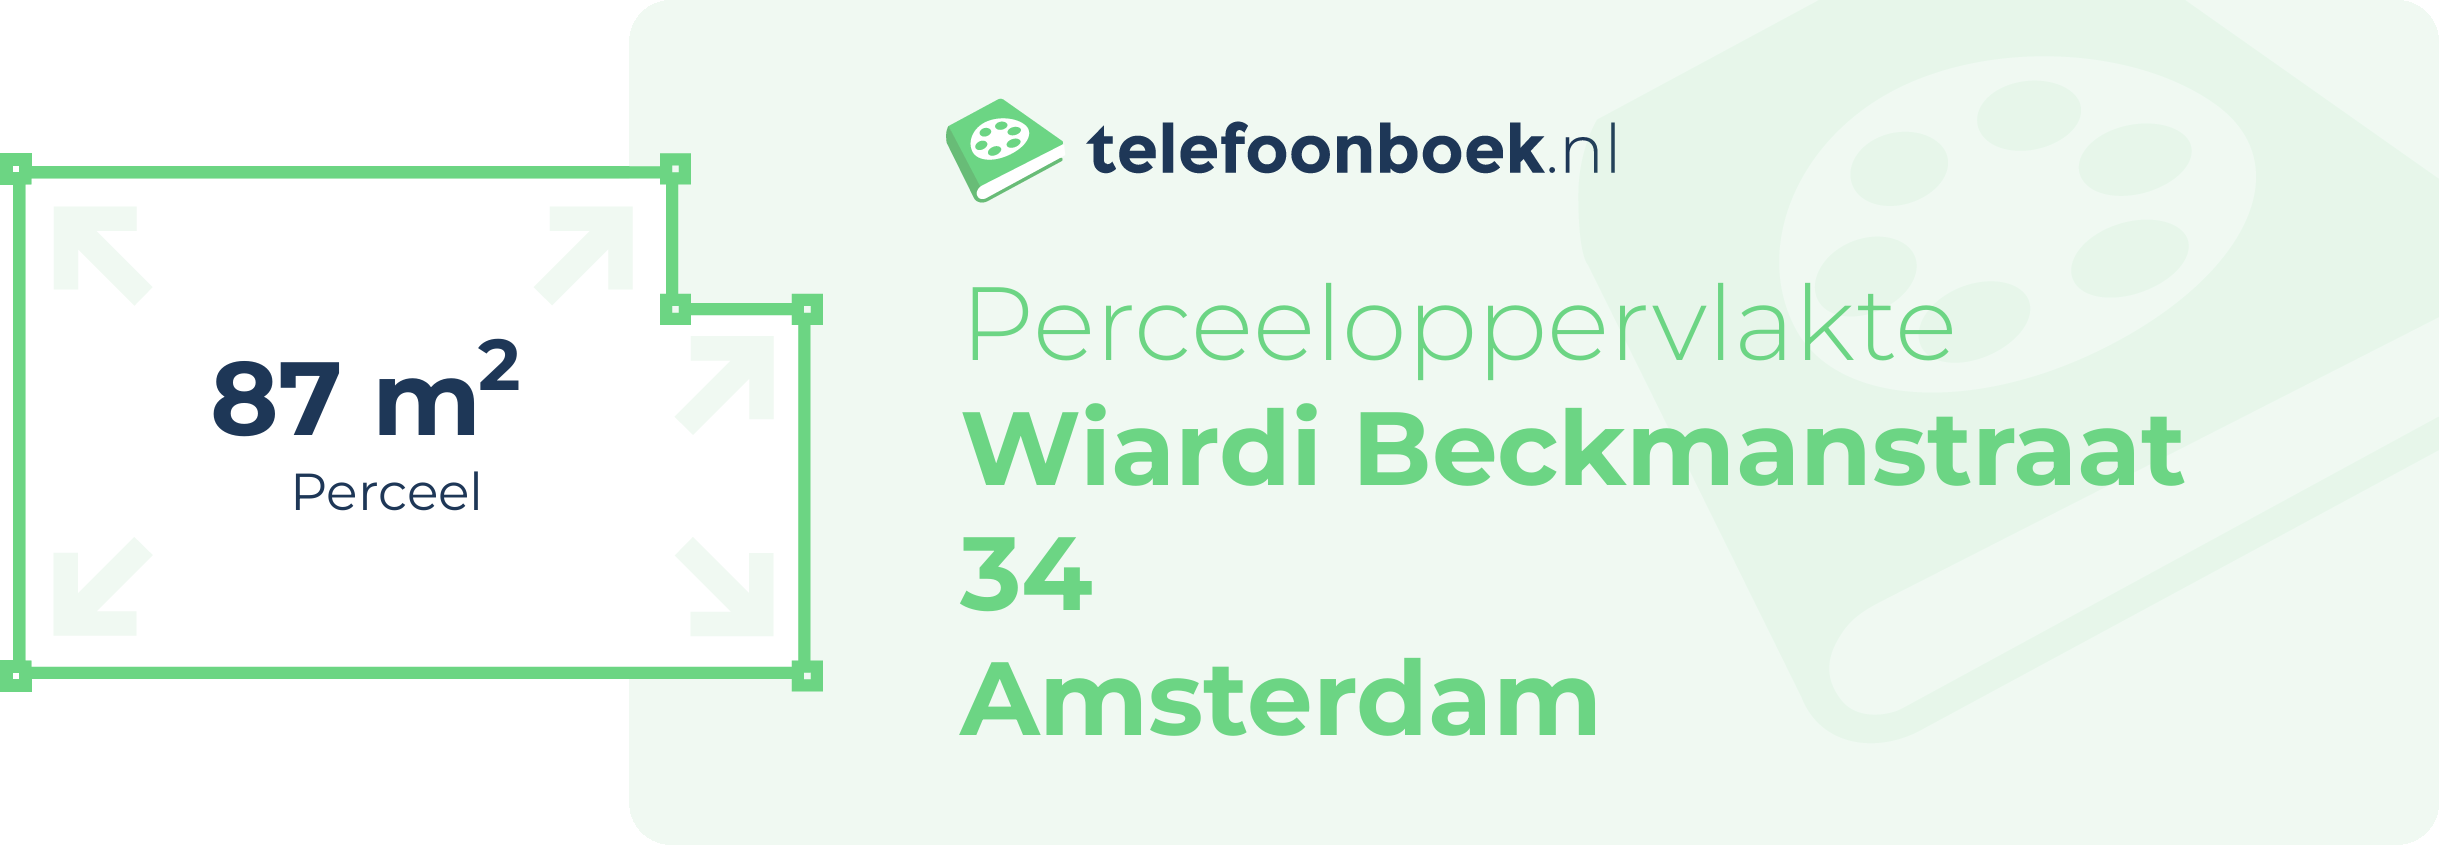 Perceeloppervlakte Wiardi Beckmanstraat 34 Amsterdam